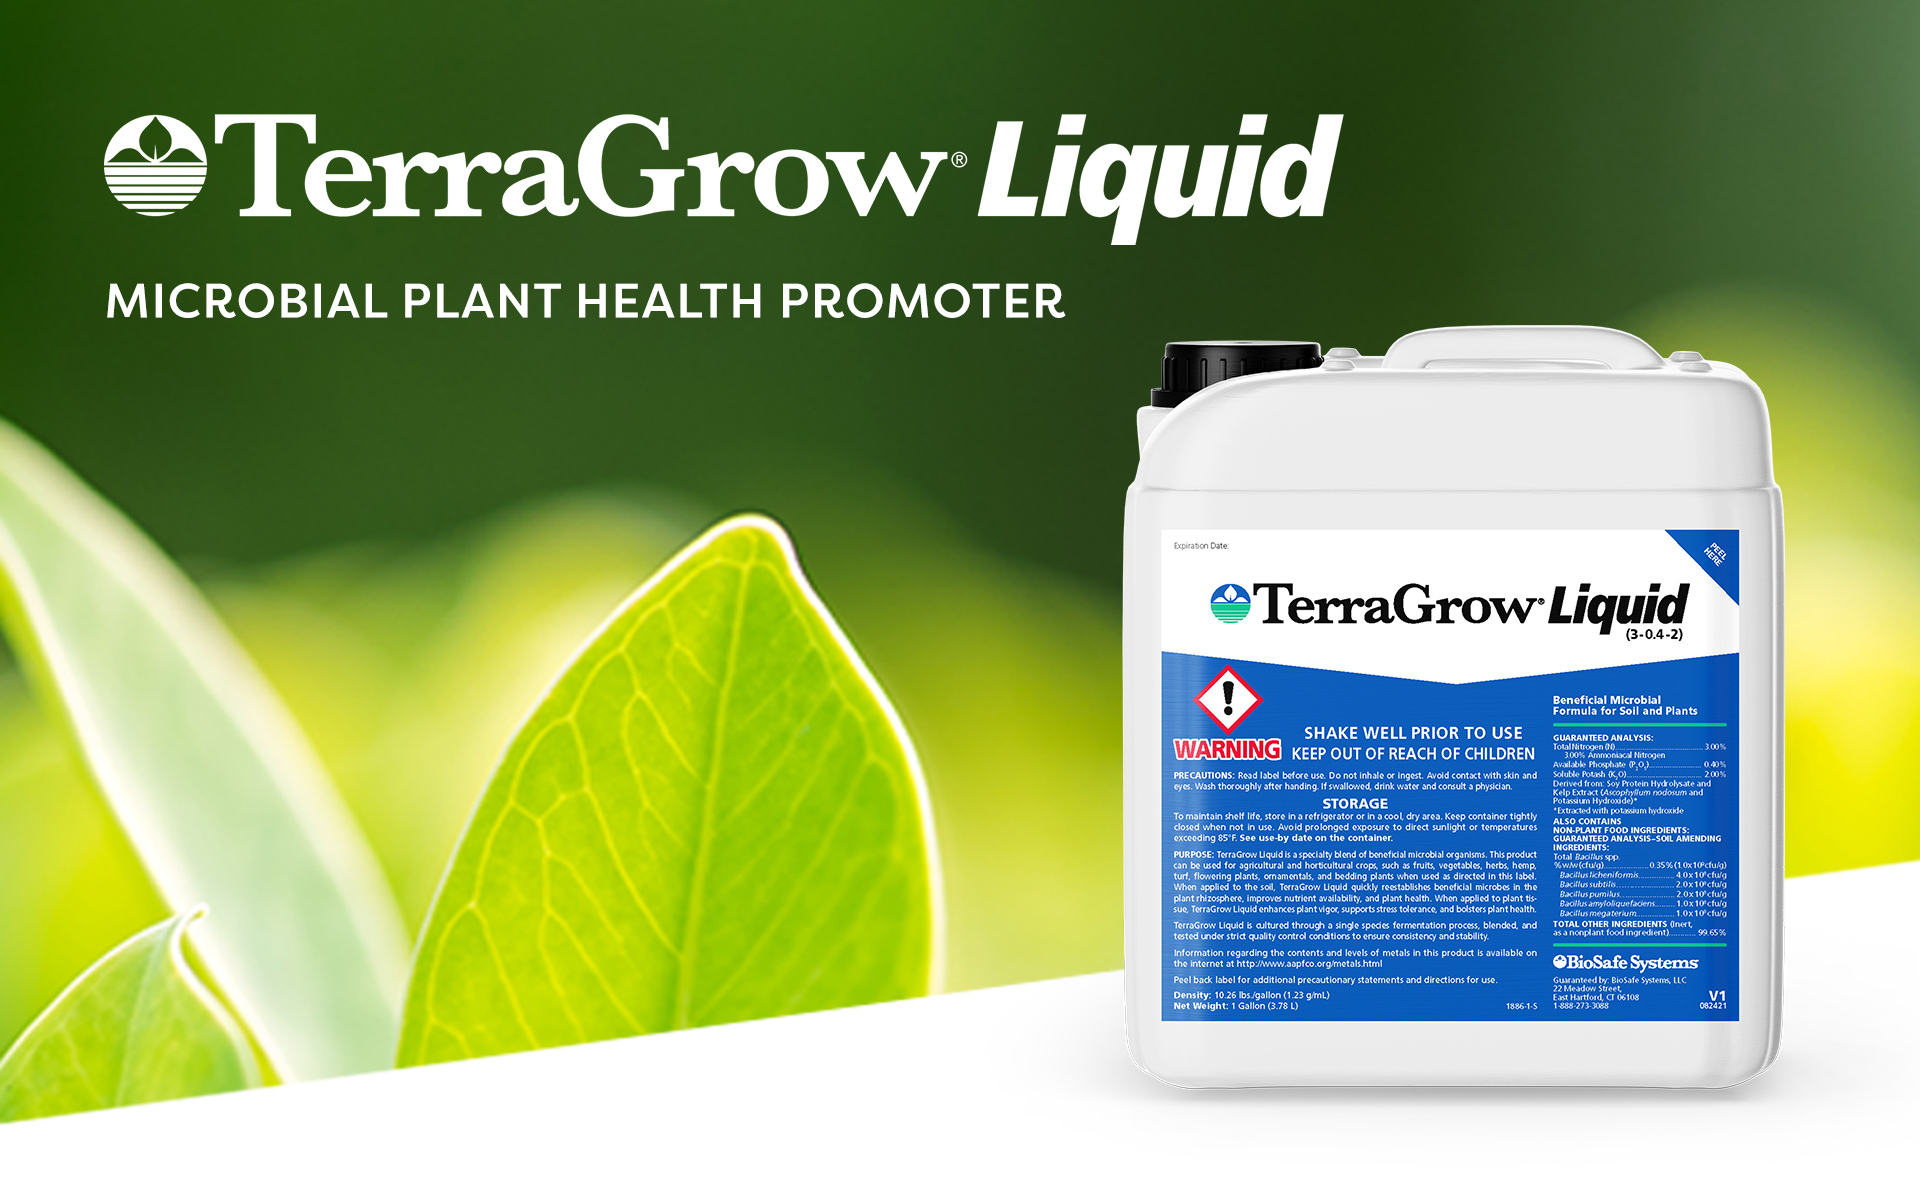 TerraGrow® Liquid, New Microbial Plant Health Promoter